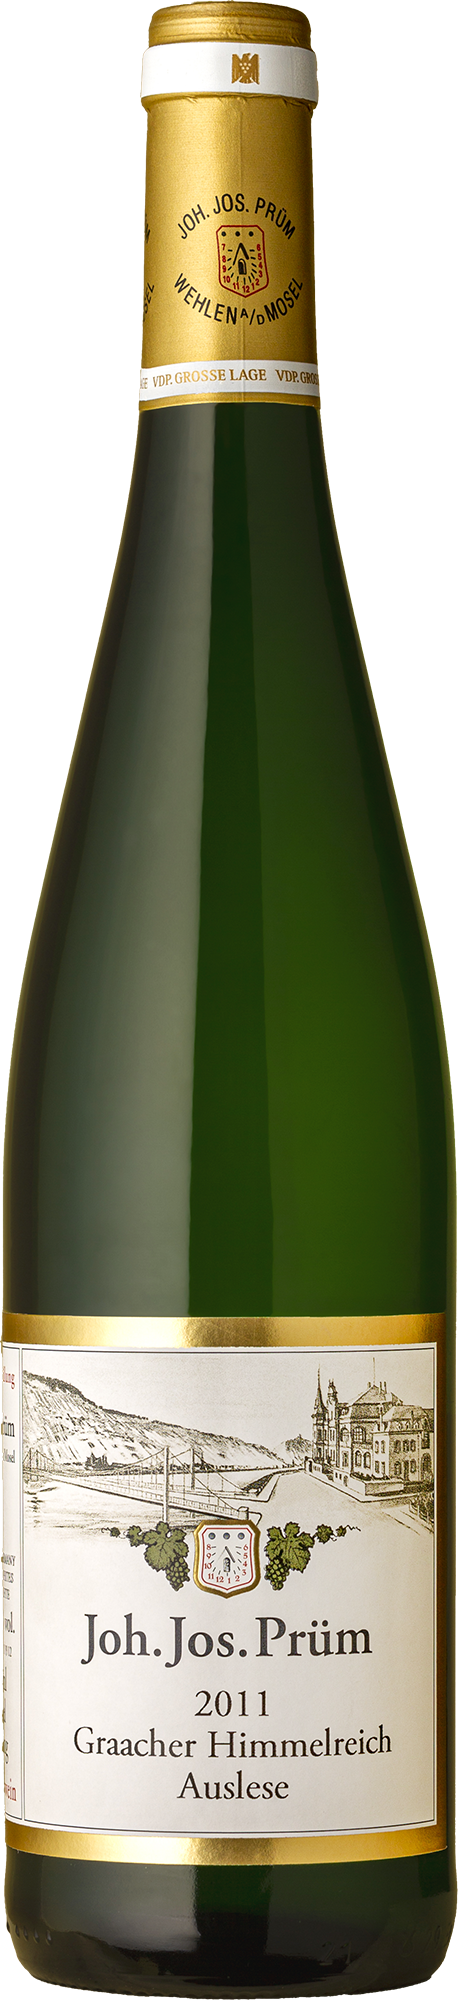 Joh Jos Prüm - Graacher Himmelreich Auslese Goldkapsel Riesling 2011 White Wine